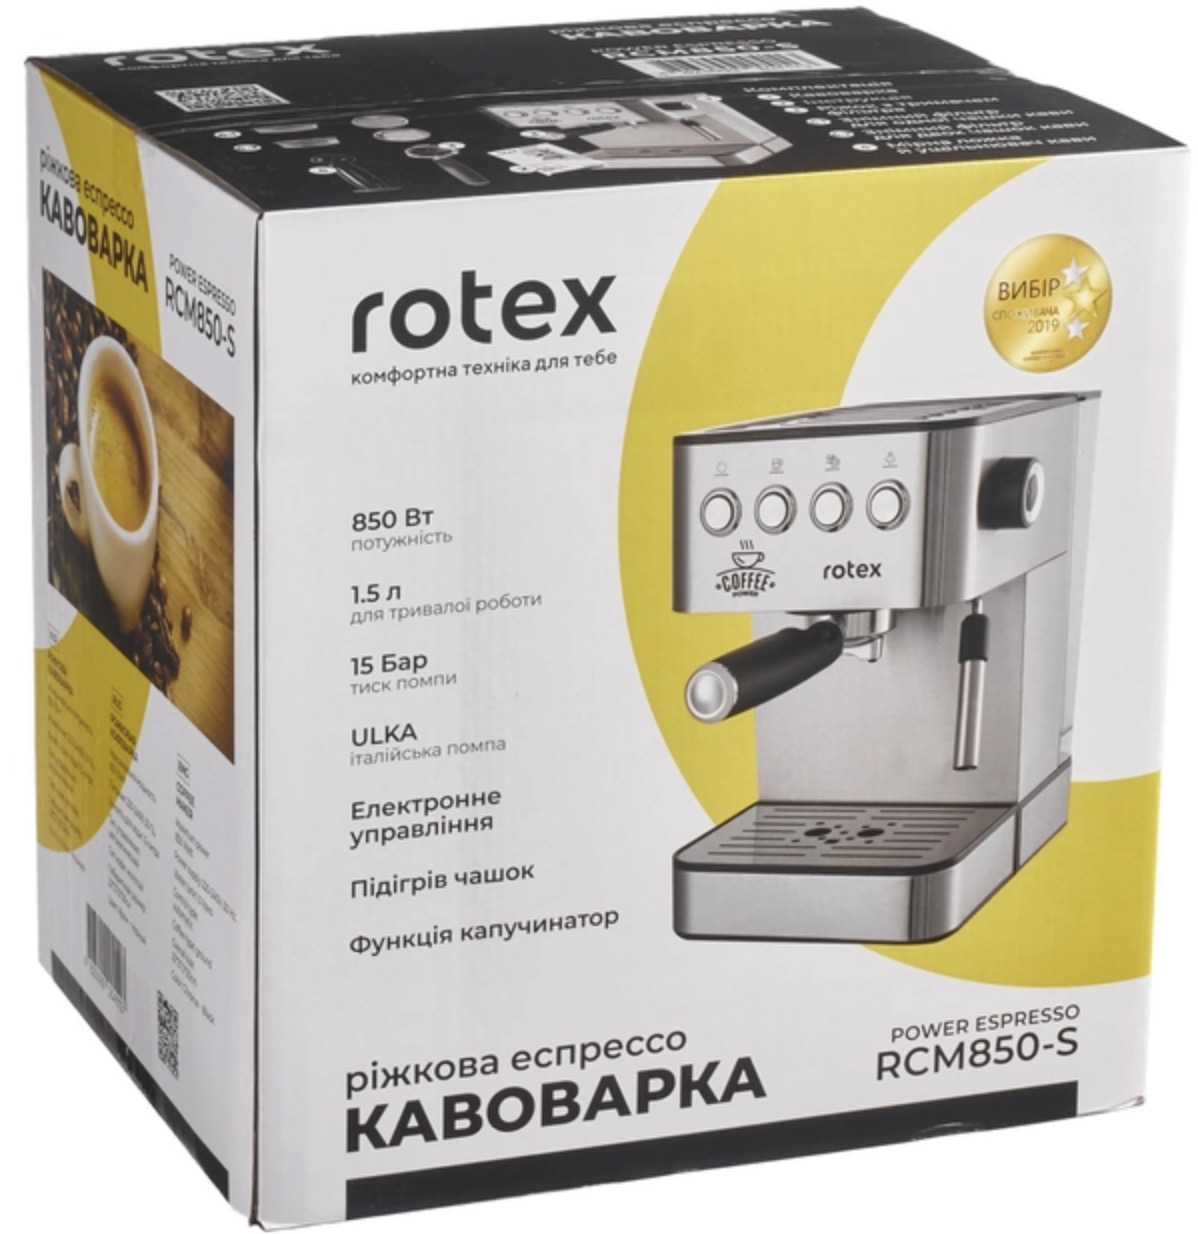 Кофеварка Rotex RCM850-S Power Espresso характеристики - фотография 7